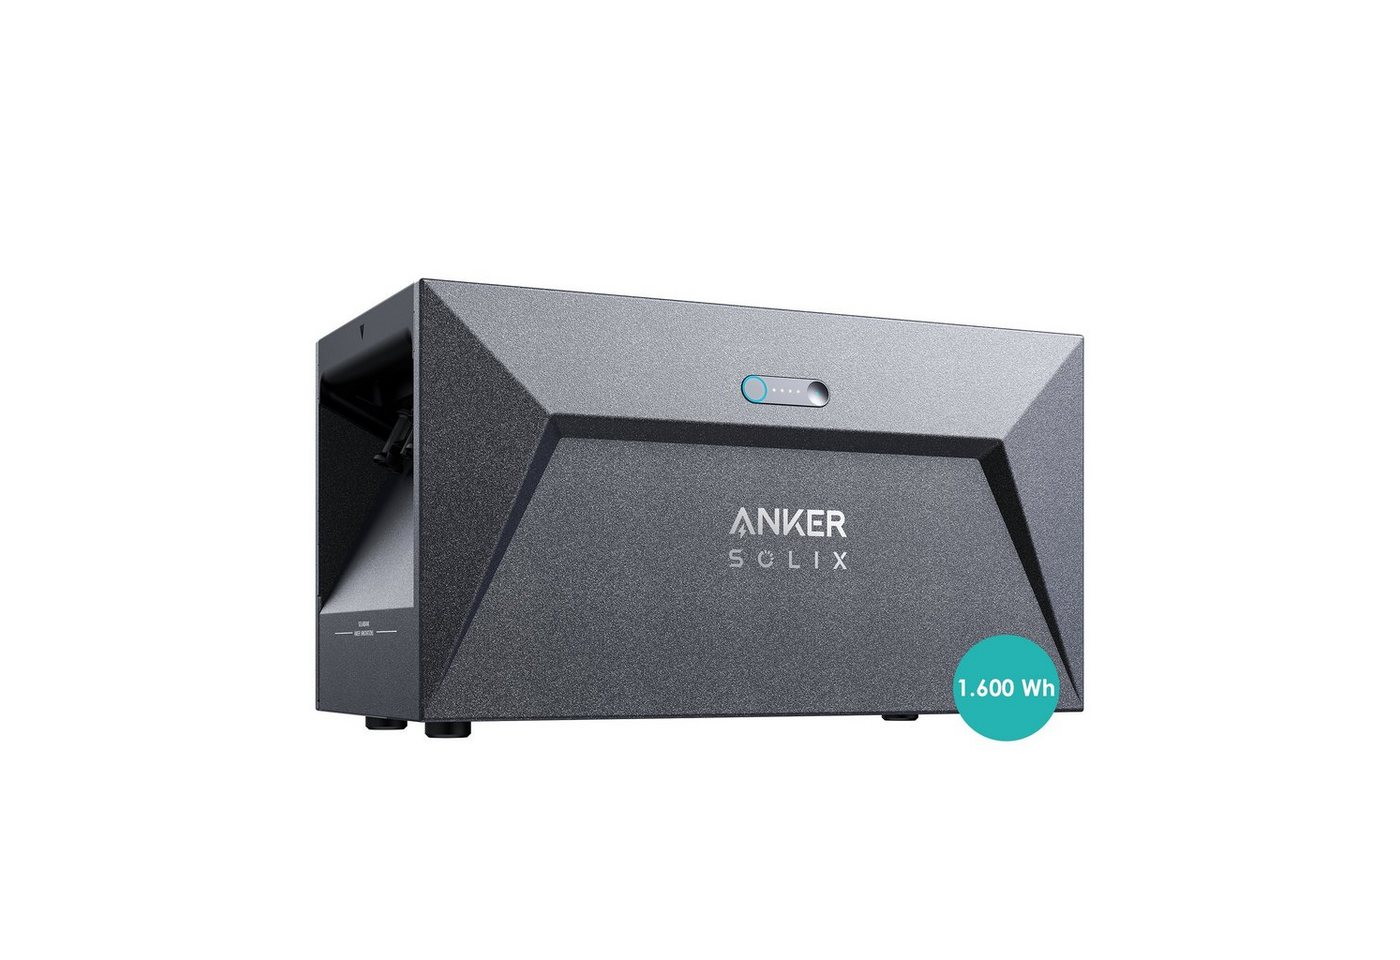 Anker SOLIX Solarbank E1600, 1.600 Wh, inkl. MC4 Kabel, LiFePO4 Solar Powerbank, WiFi + Bluetooth von Anker